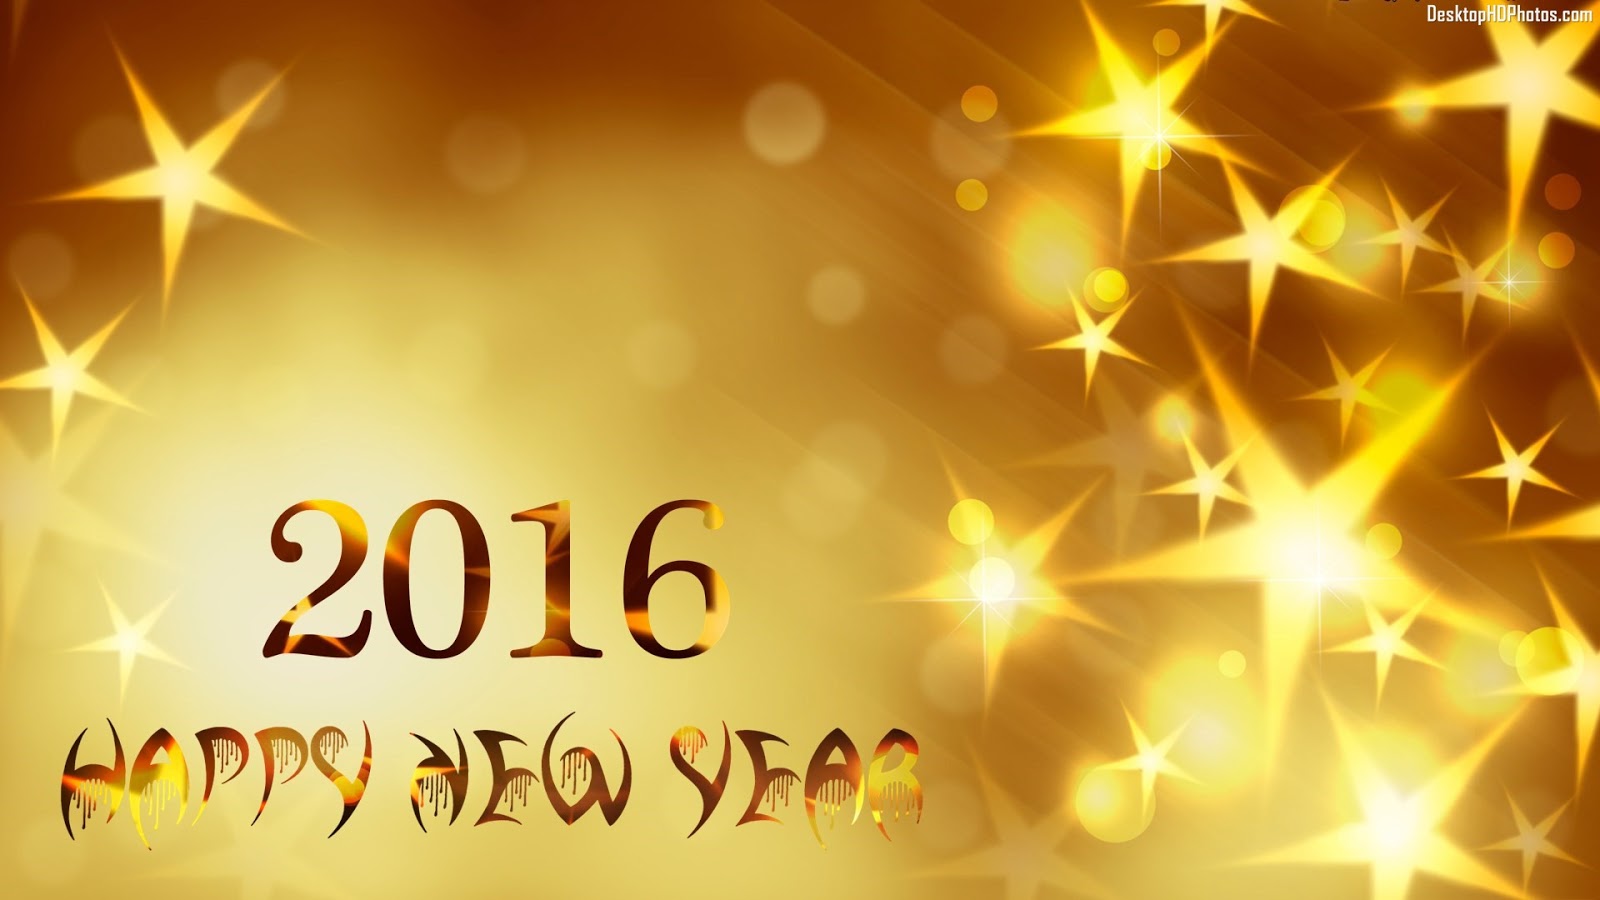 hinh-anh-tet-2016-xuan-2016-happy-new-year-2016-5